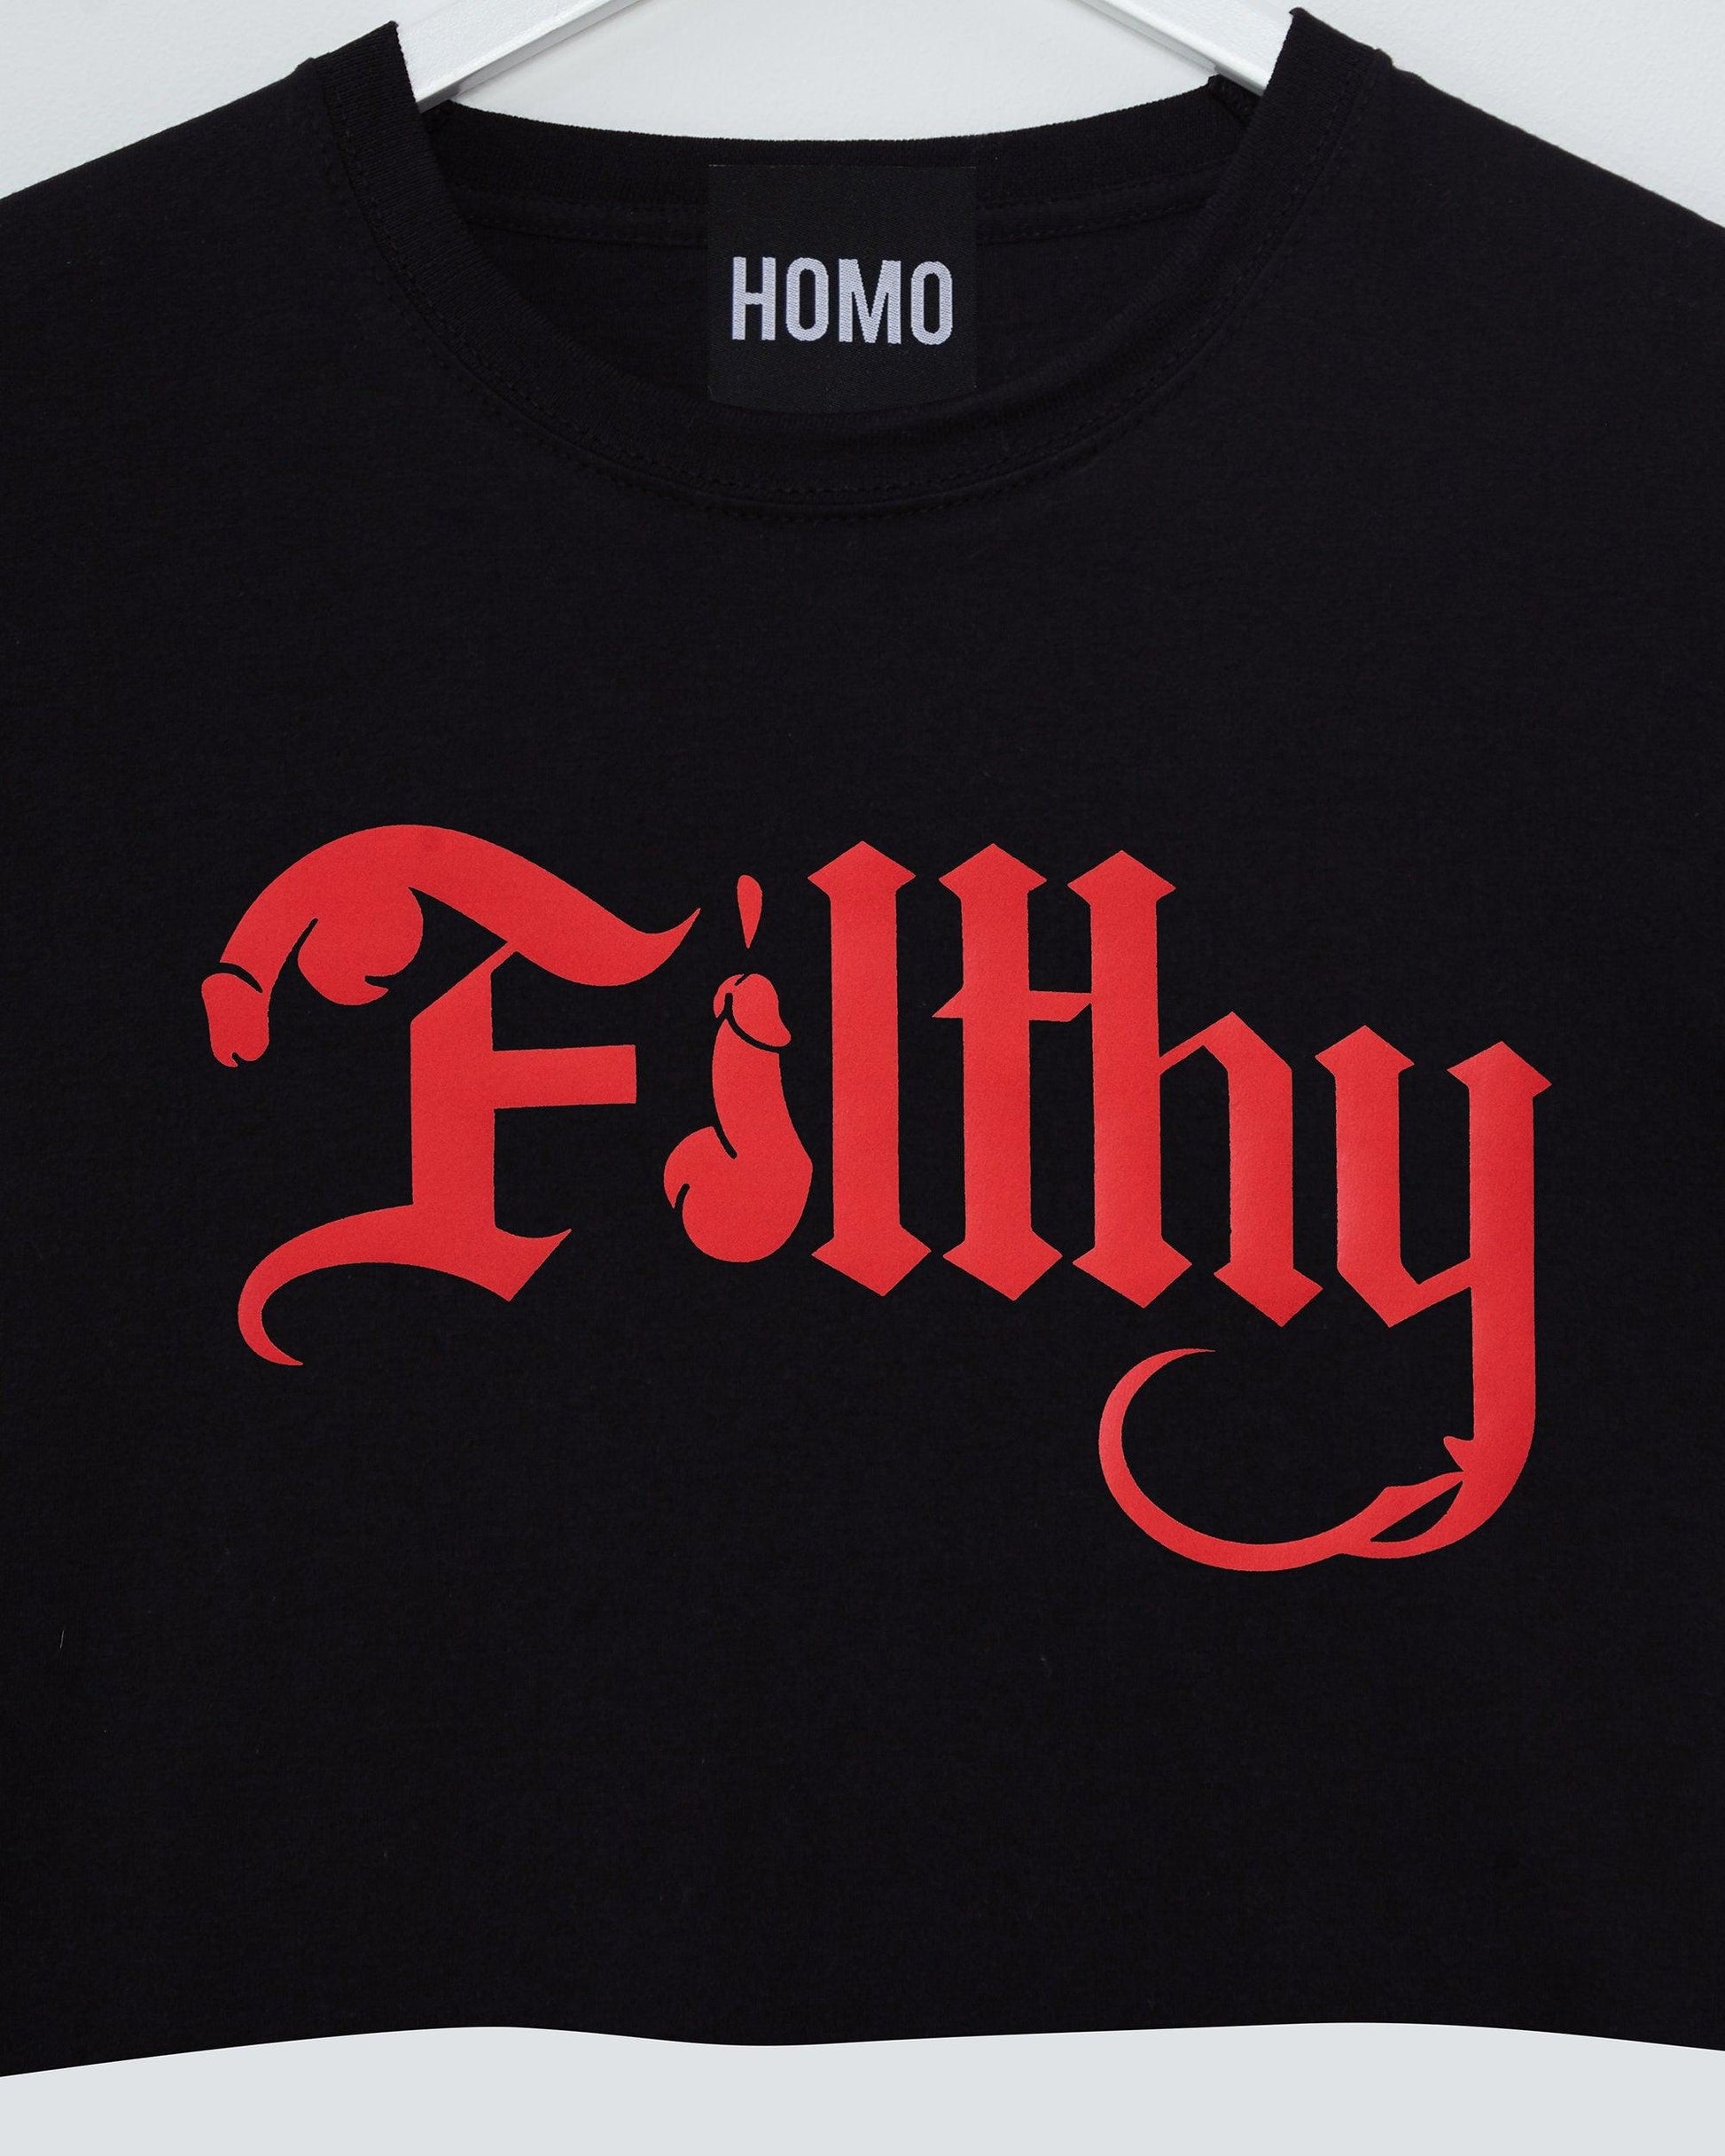 Filthy, red on black - mens crop top. - HOMOLONDON